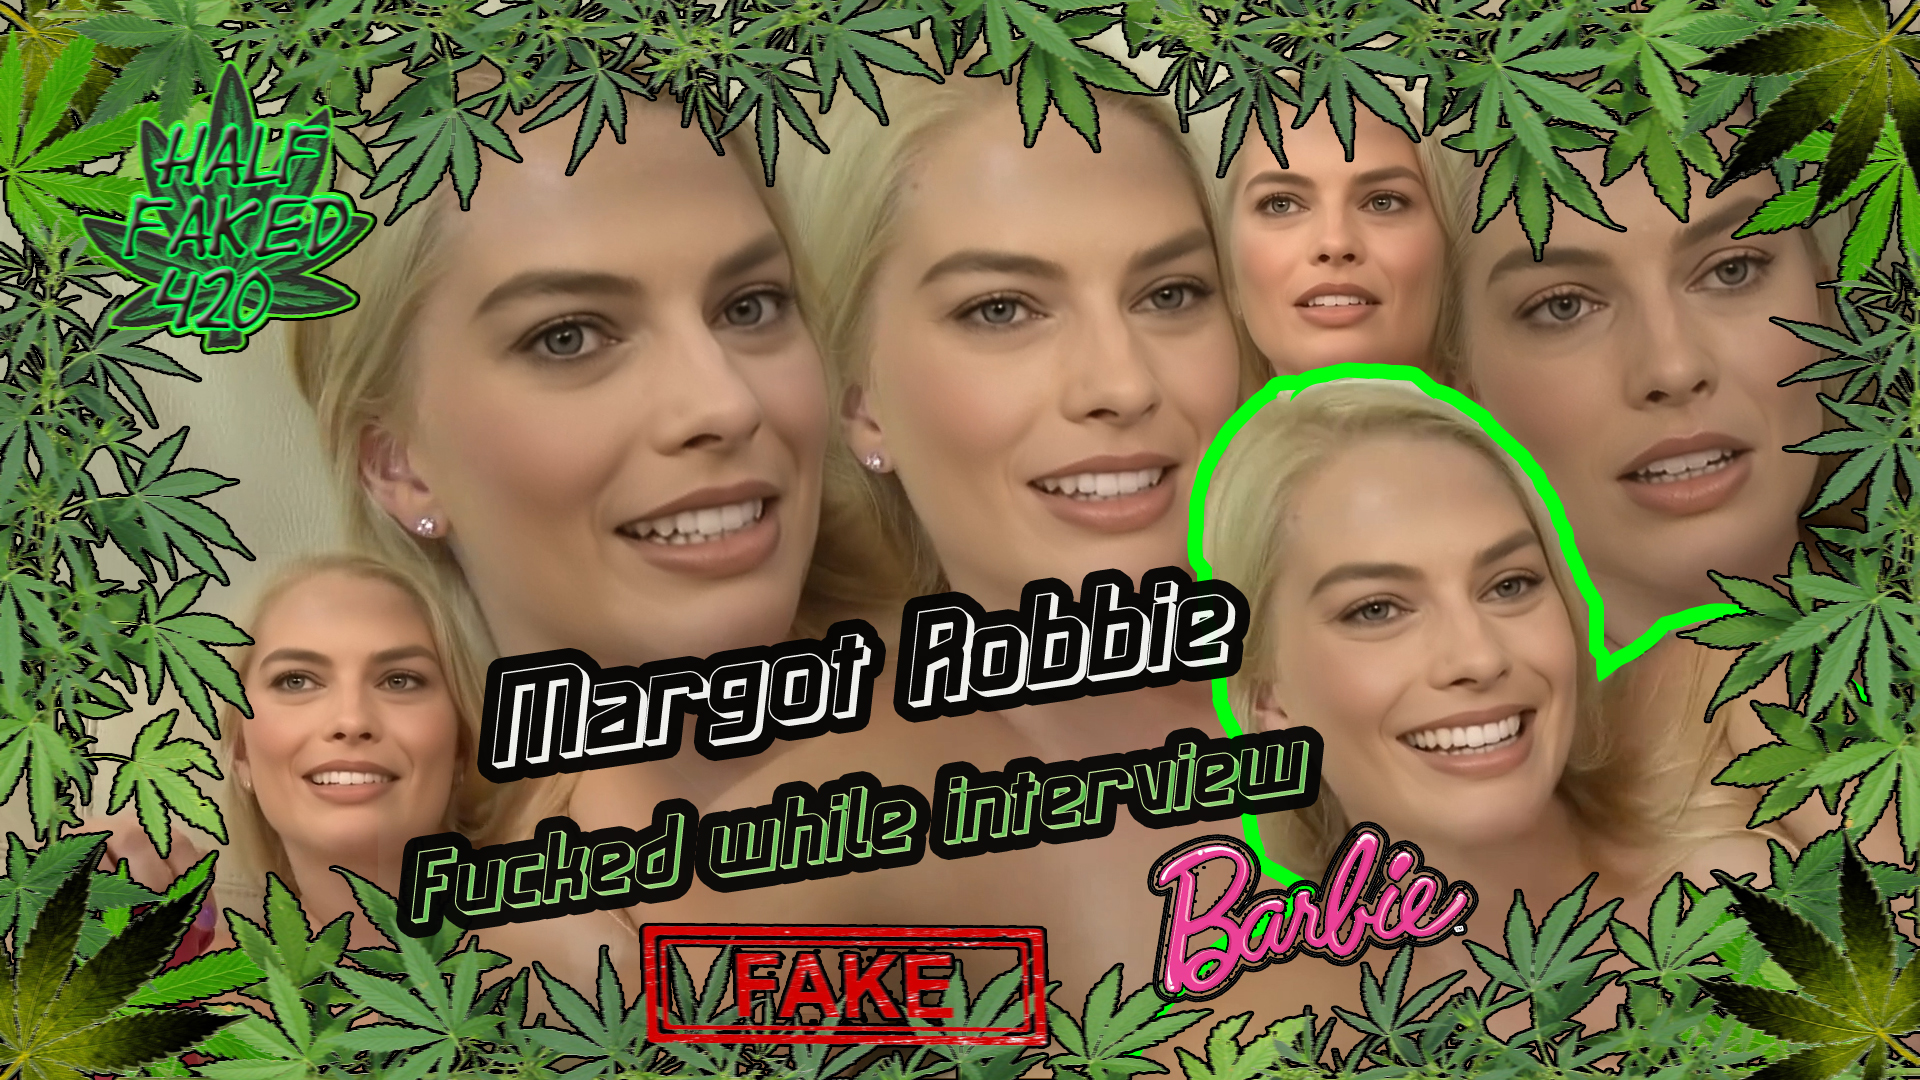 Margot Robbie - Fucked while interview | FAKE